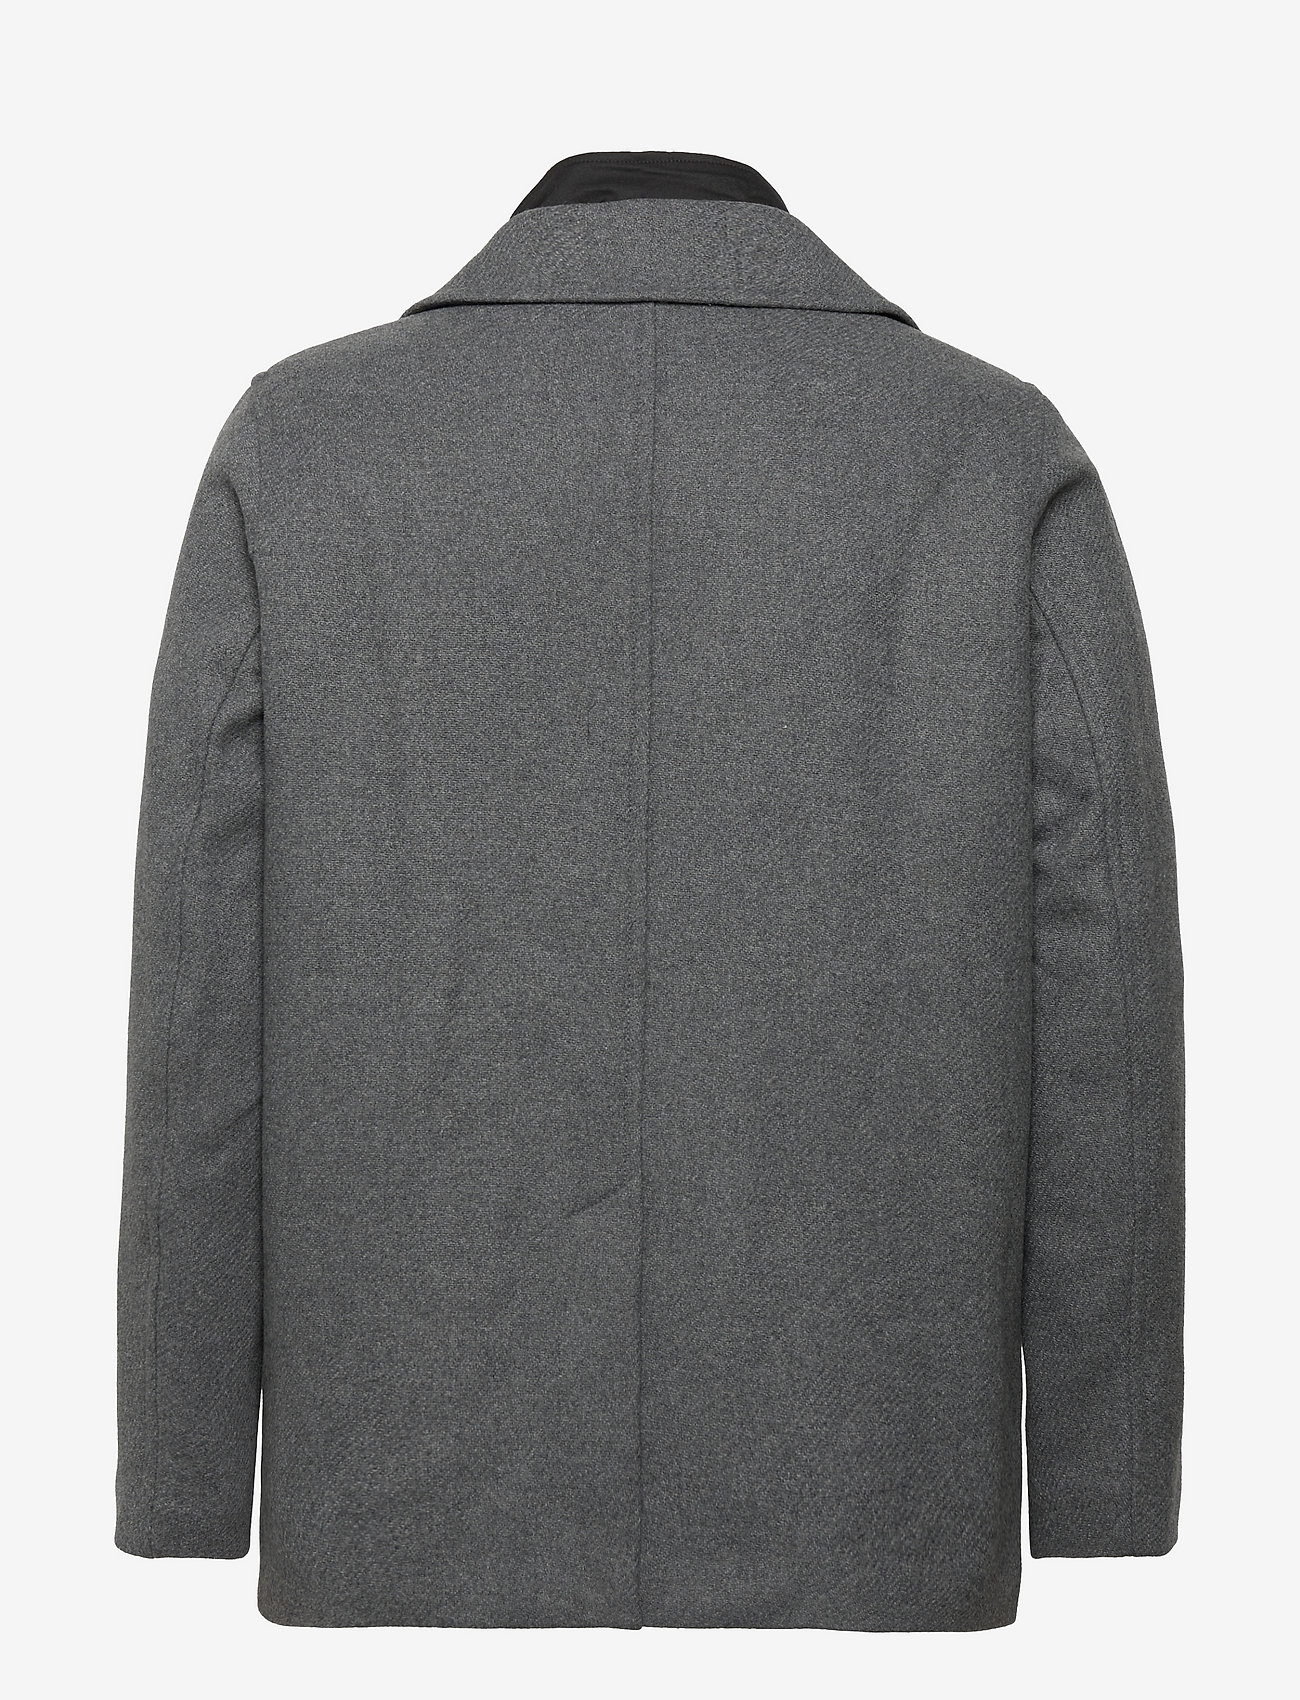 Esprit Casual - Men Coats woven regular - wolljacken - grey 5 - 1